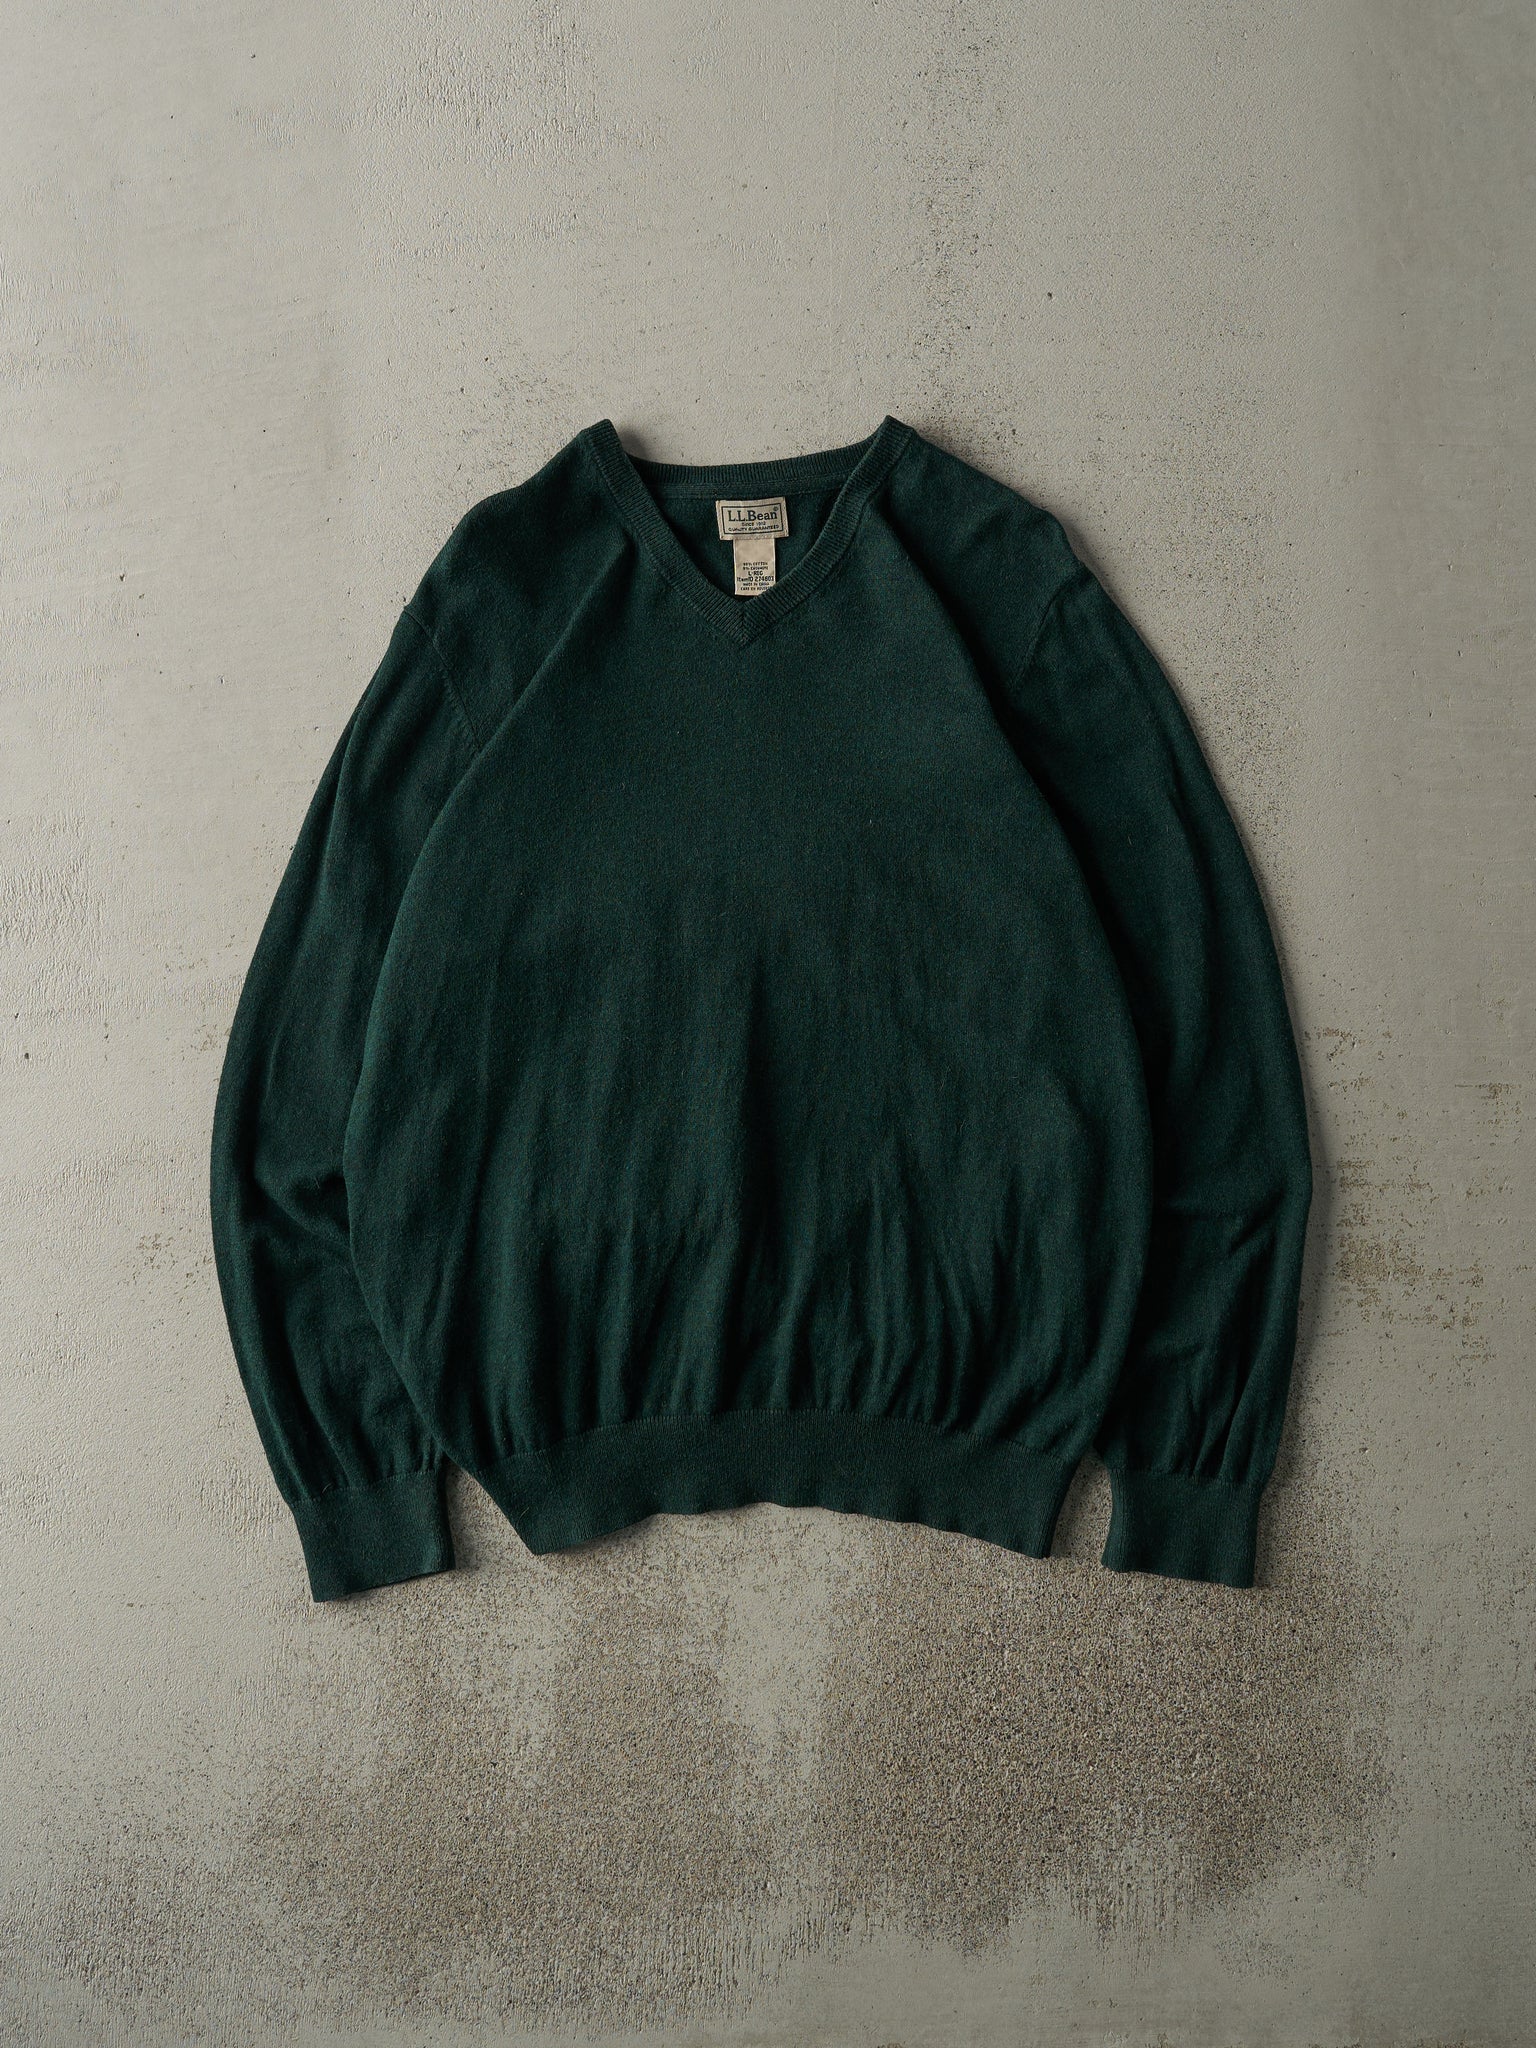 Vintage 90s Forest Green LL Bean V-Neck Knit Pullover (M)